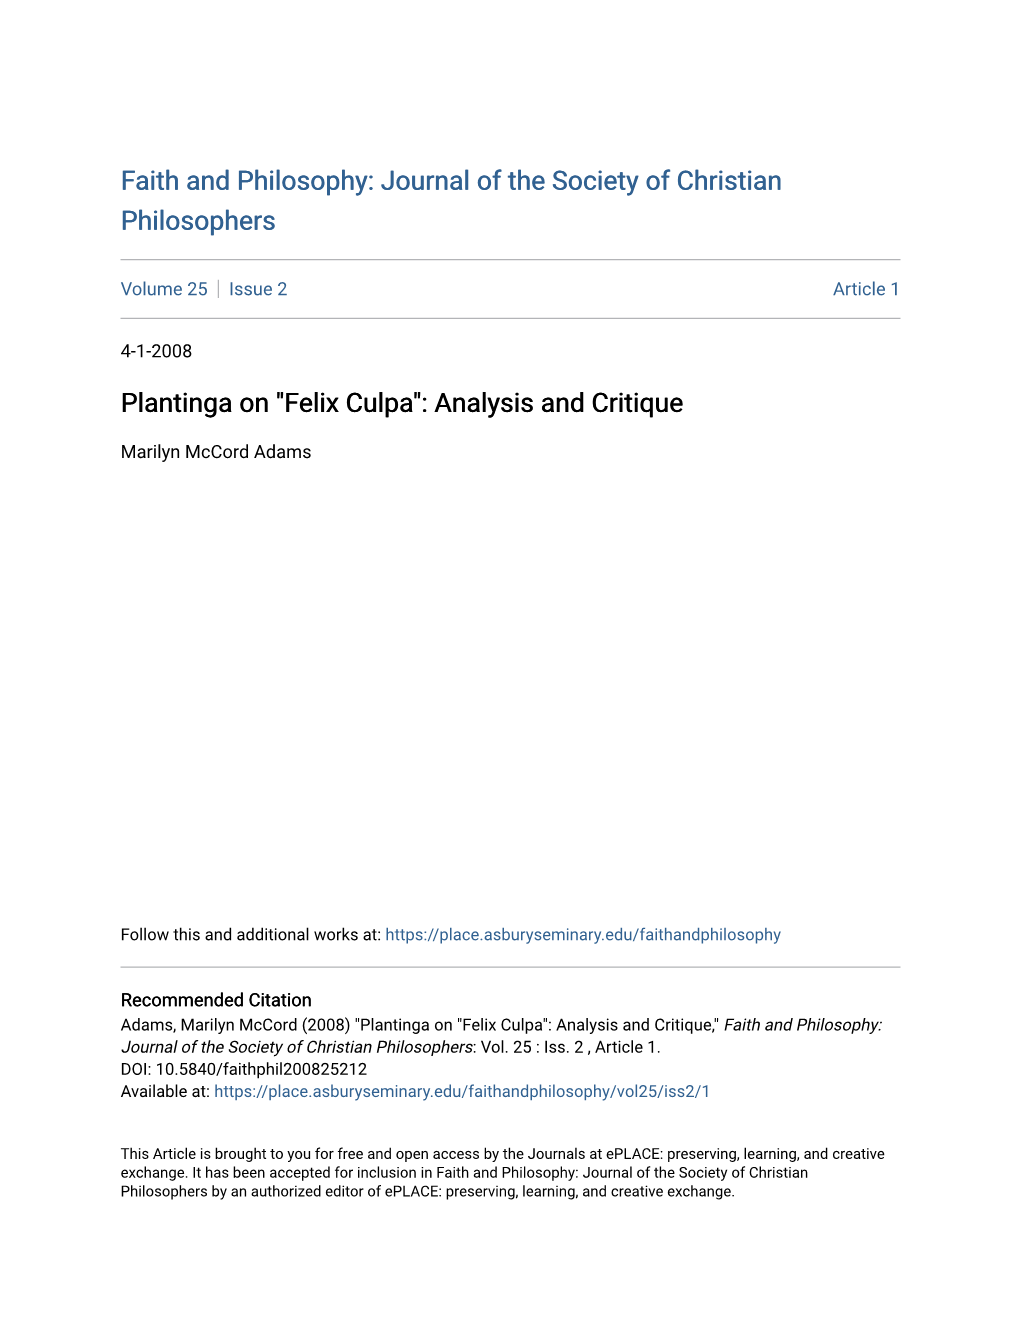 Plantinga on "Felix Culpa": Analysis and Critique